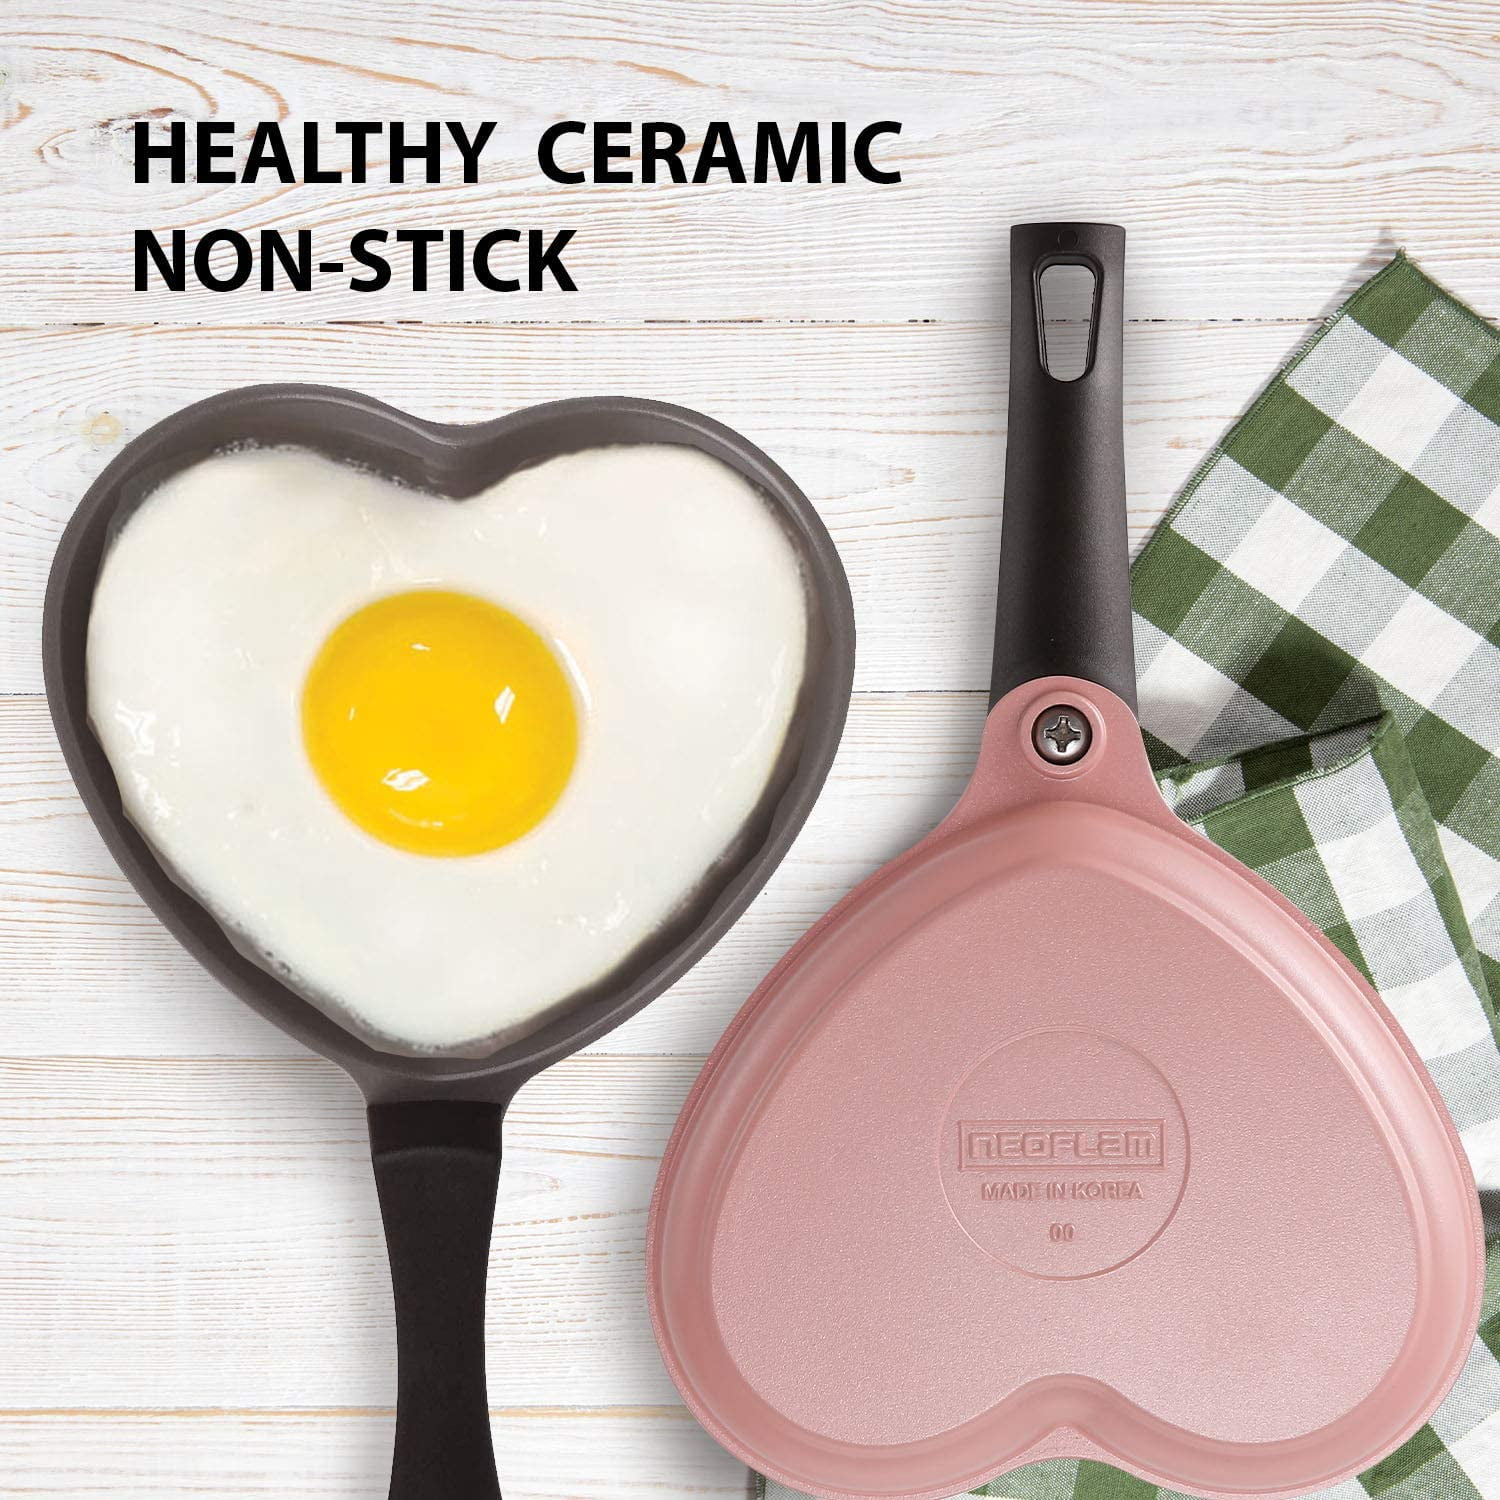 Neoflam Ceramic Nonstick Heart-Shaped Egg Pan Set, Lightweight cast  aluminum body ( Pink & Red )